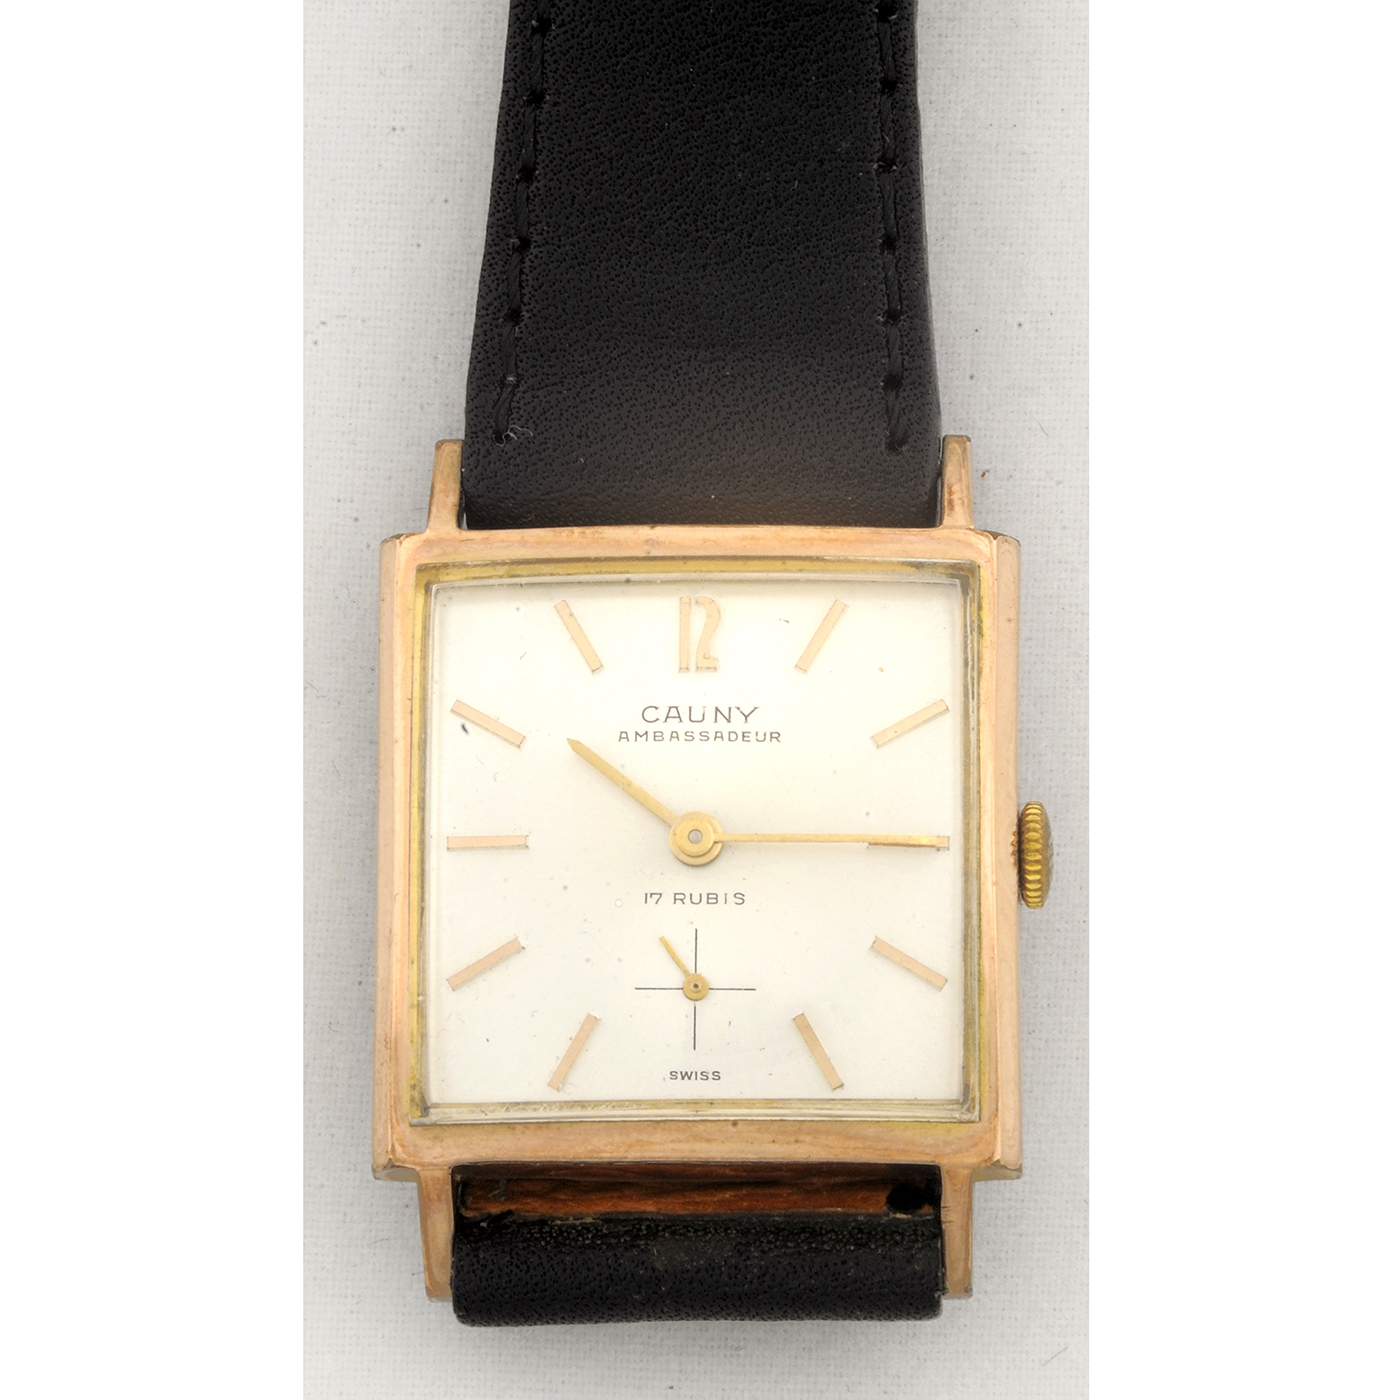 CAUNY AMBASSADEUR. Reloj de pulsera para caballero. Ca. 1970.